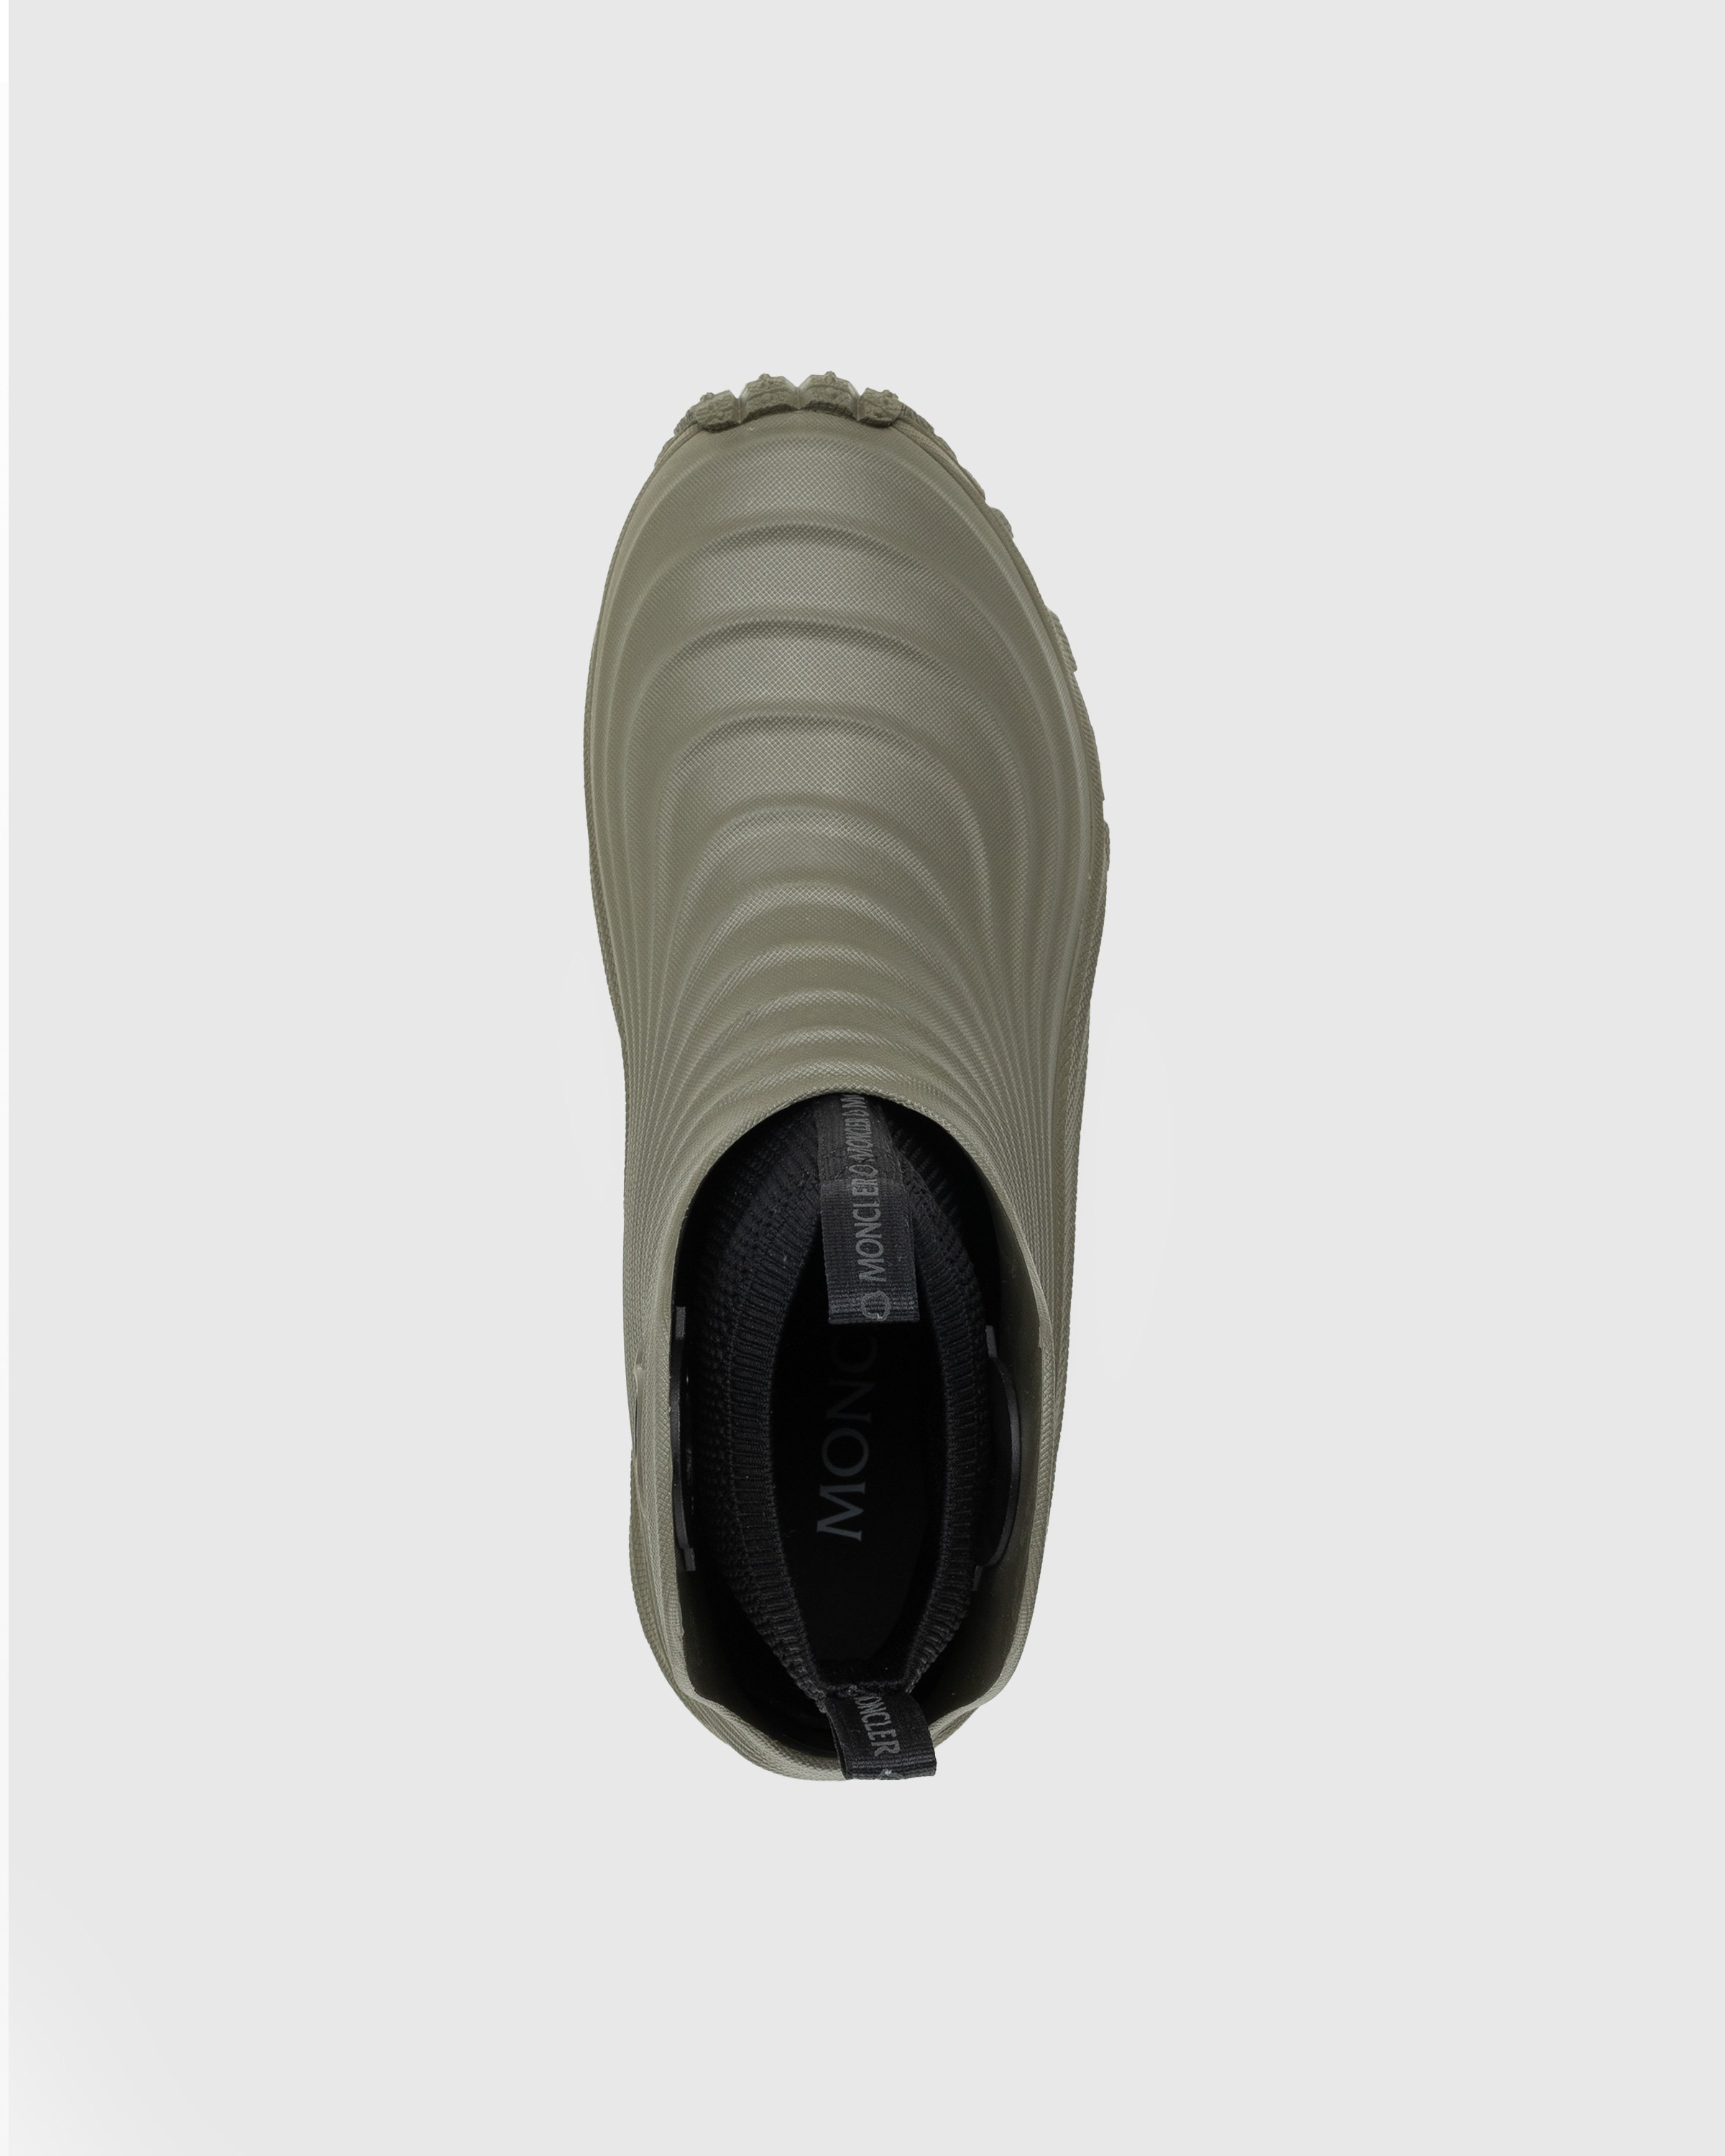 Moncler - Acqua High Rain Boots Khaki - Footwear - Brown - Image 5